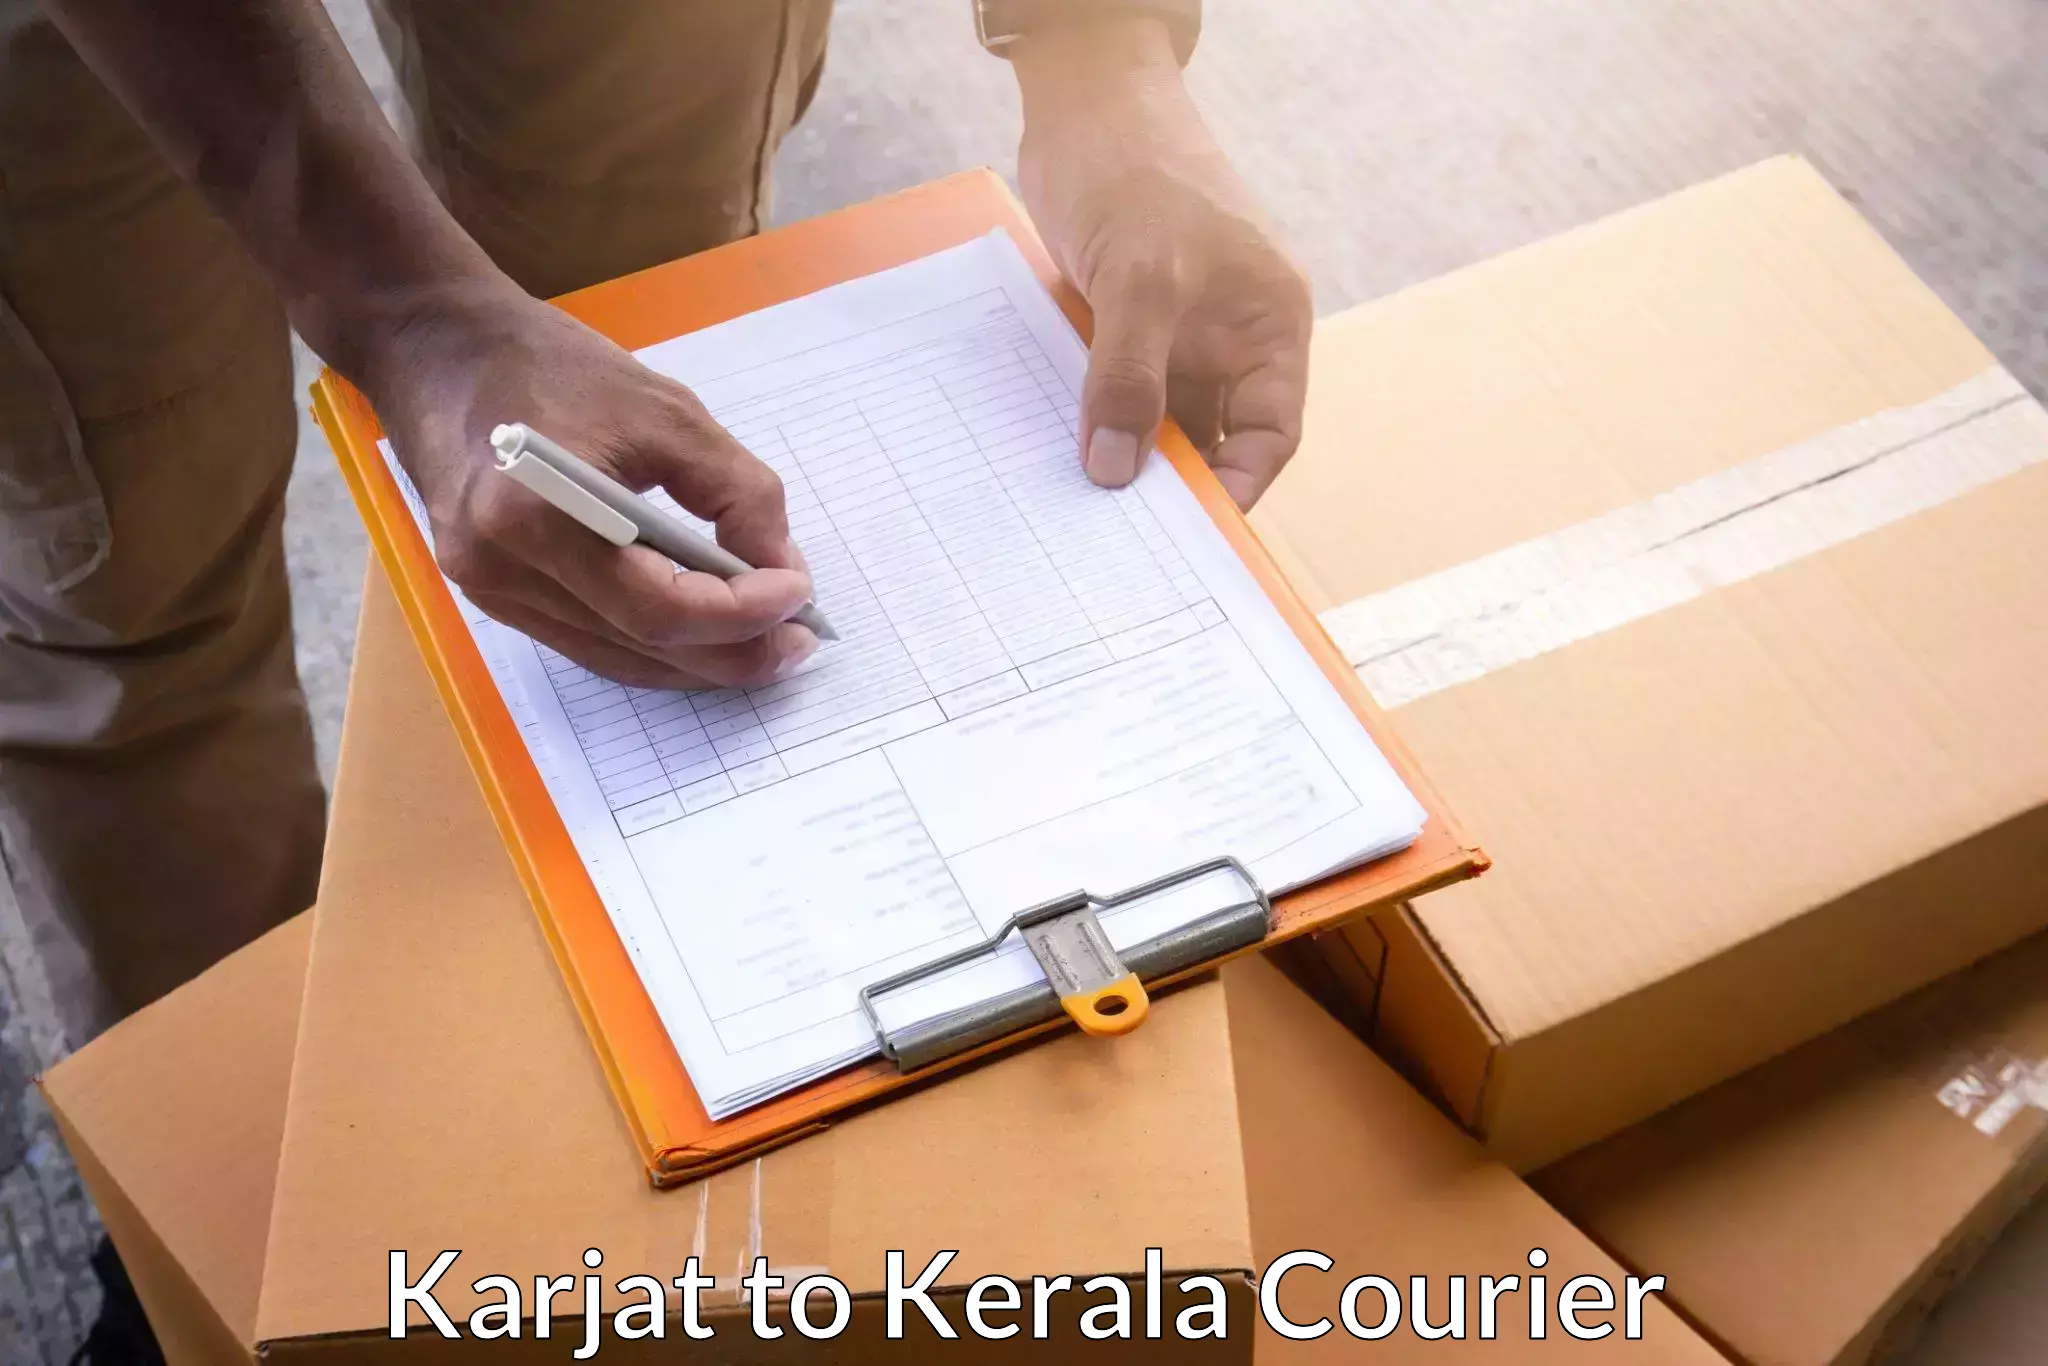 Efficient freight service Karjat to Kerala